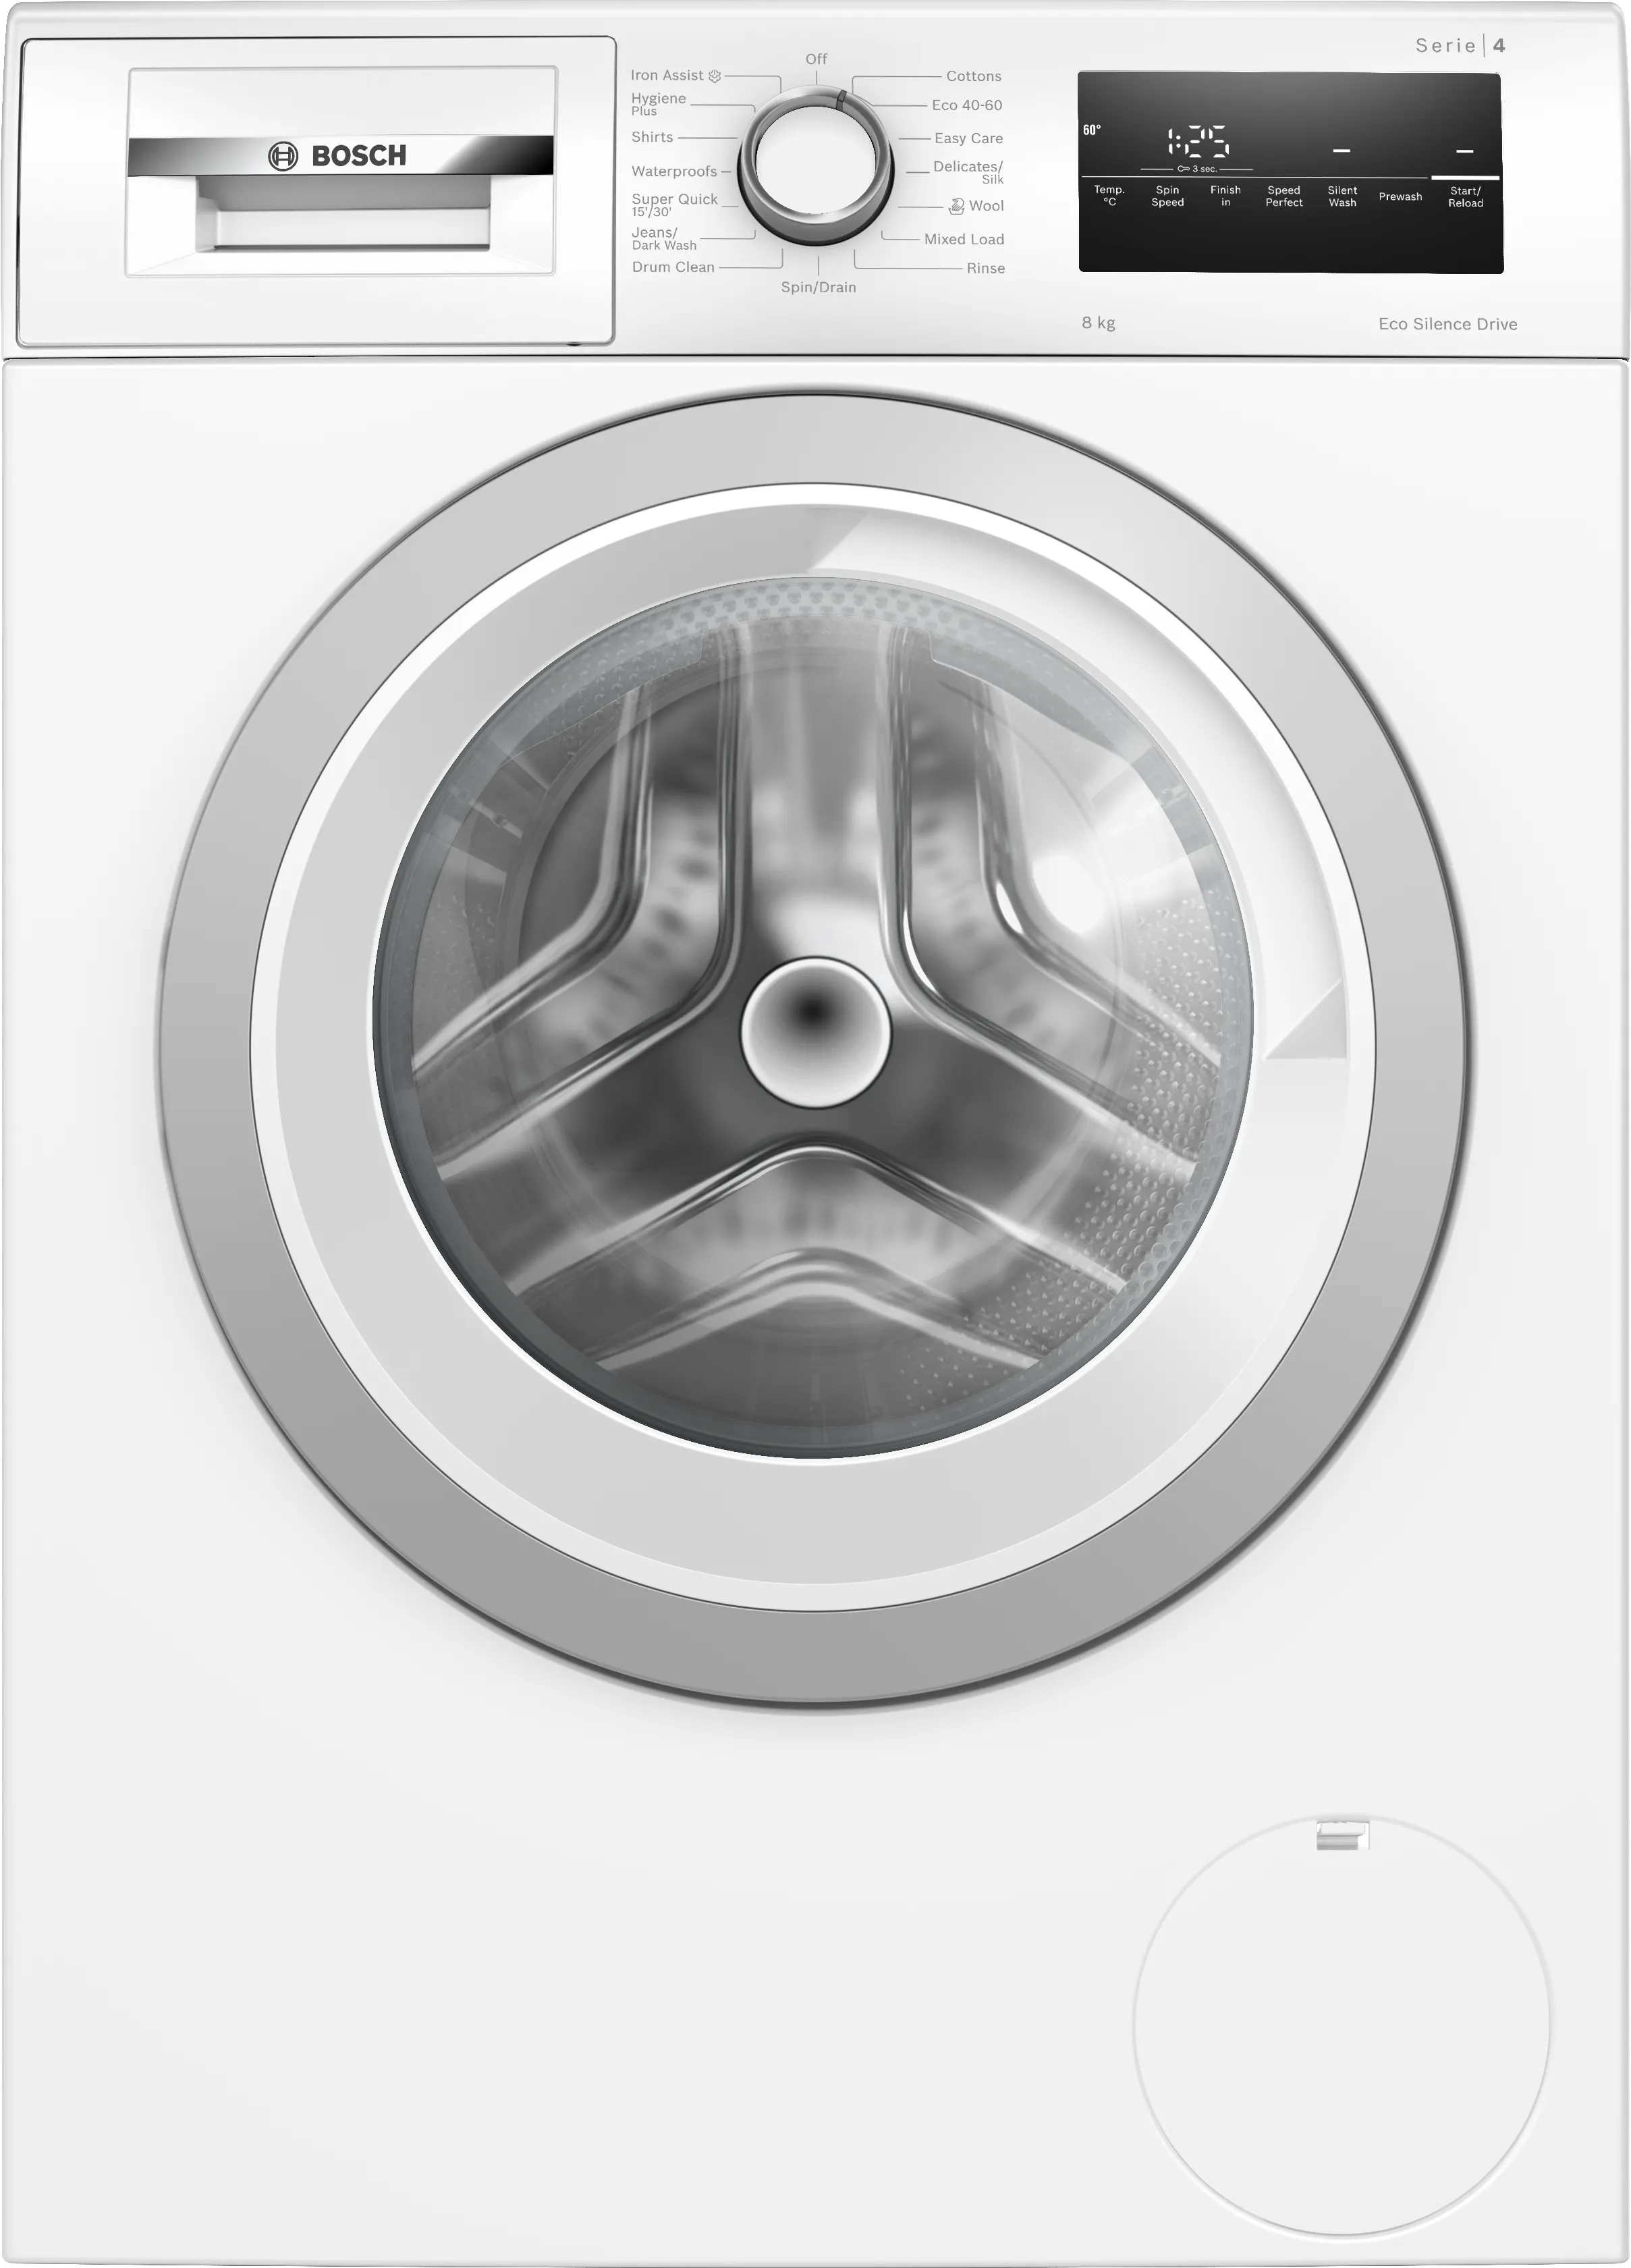 Series 4 washing machine, frontloader fullsize 8 kg 1400 rpm 